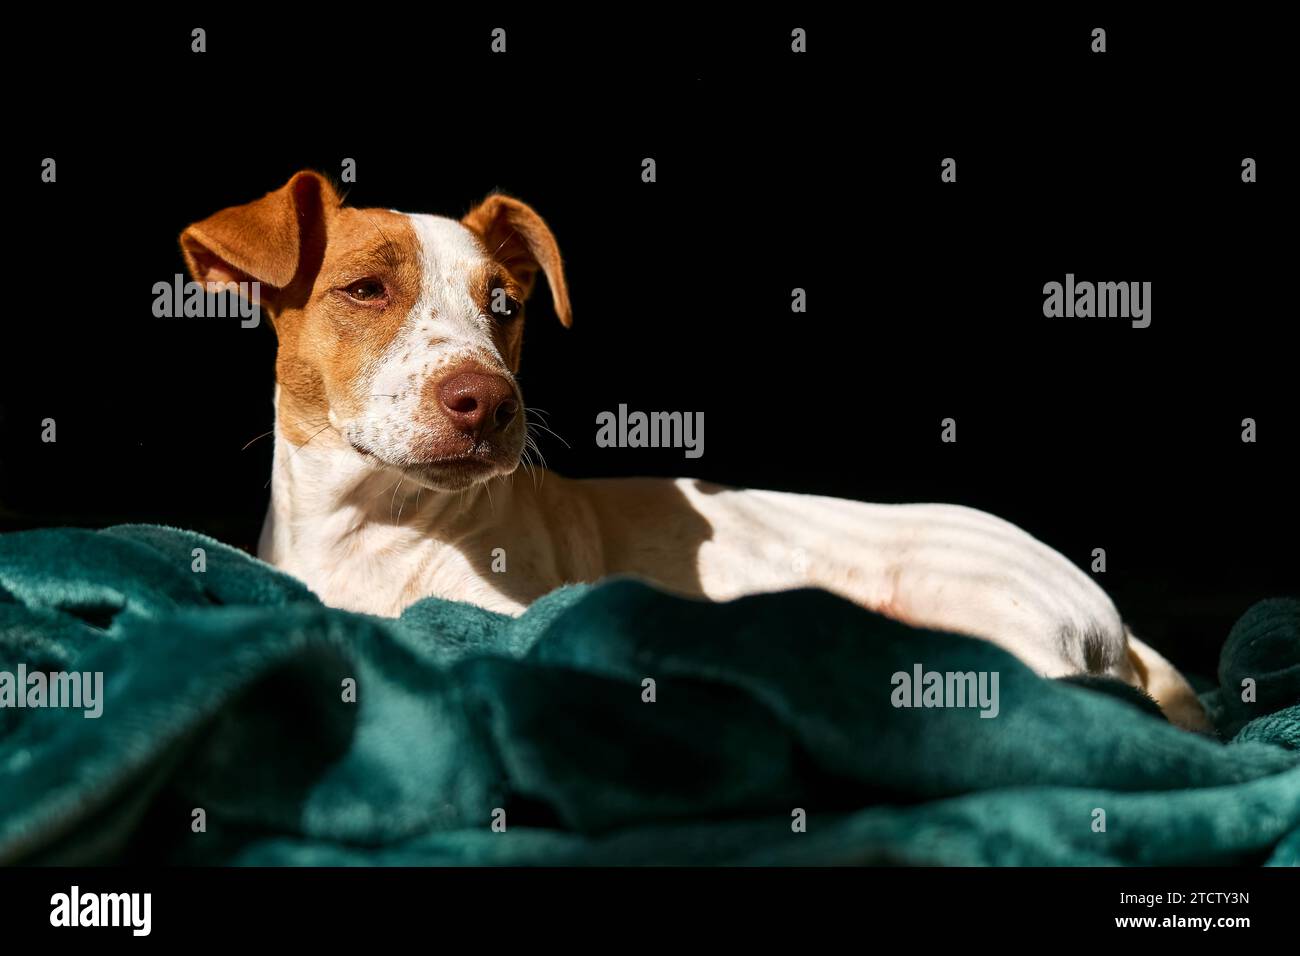 Porträt des jungen Hundejacks russell Terrier, der wegblickt und sich am sonnigen Frühlingstag auf türkisfarbenem Karo ruht. Stockfoto